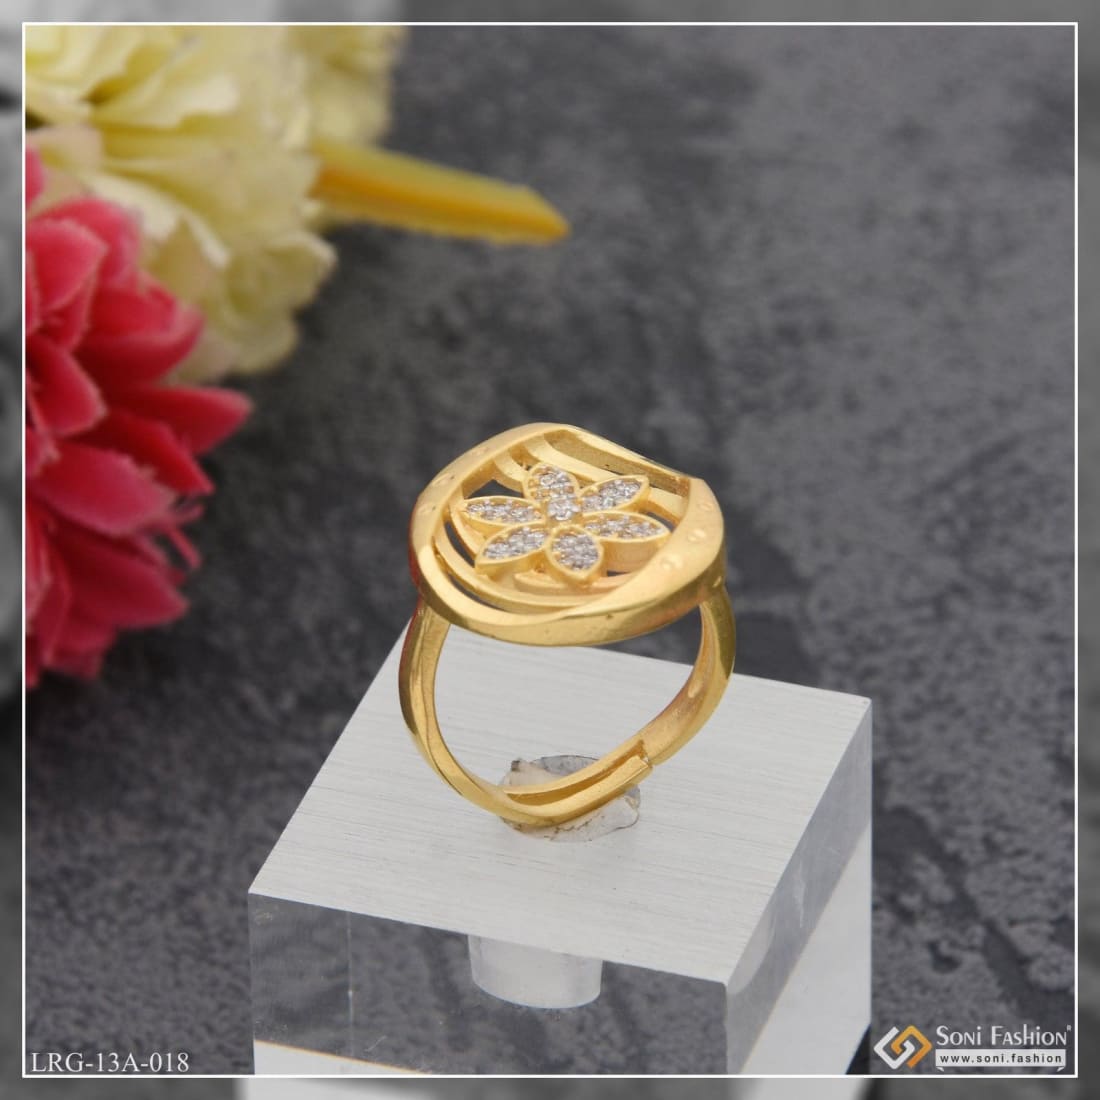 Diamond Daisy Flower Petal Ring in 14k Gold » Long Island, NY Jewelry Store